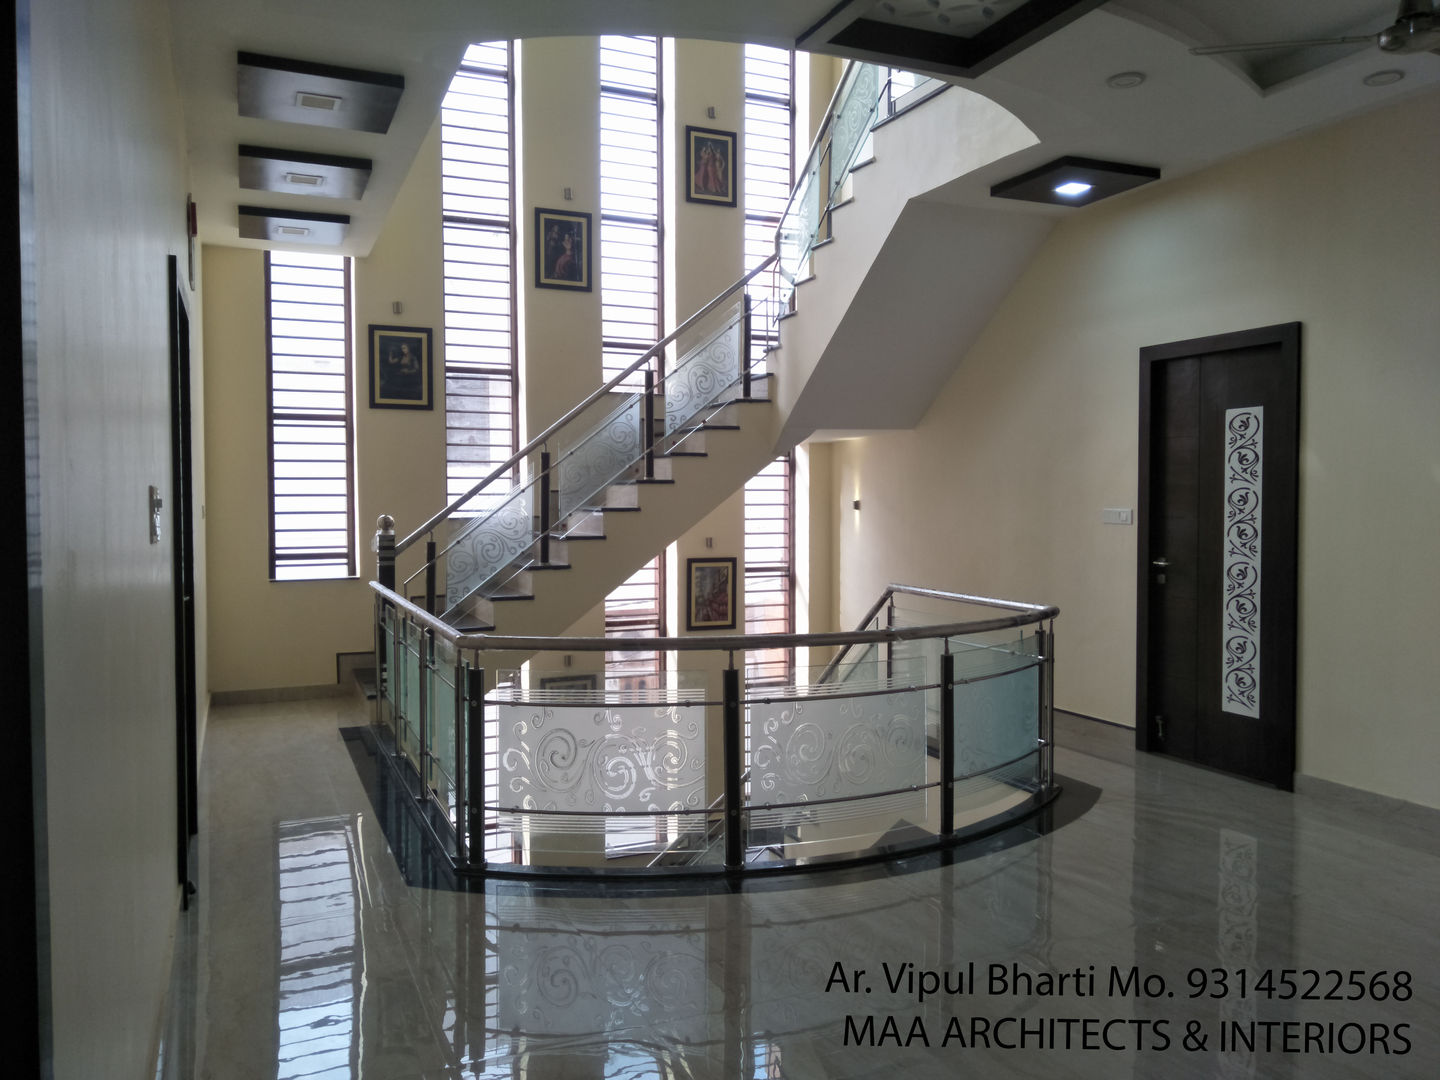 Sunil ji Kalyani , MAA ARCHITECTS & INTERIOR DESIGNERS MAA ARCHITECTS & INTERIOR DESIGNERS الممر الحديث، المدخل و الدرج